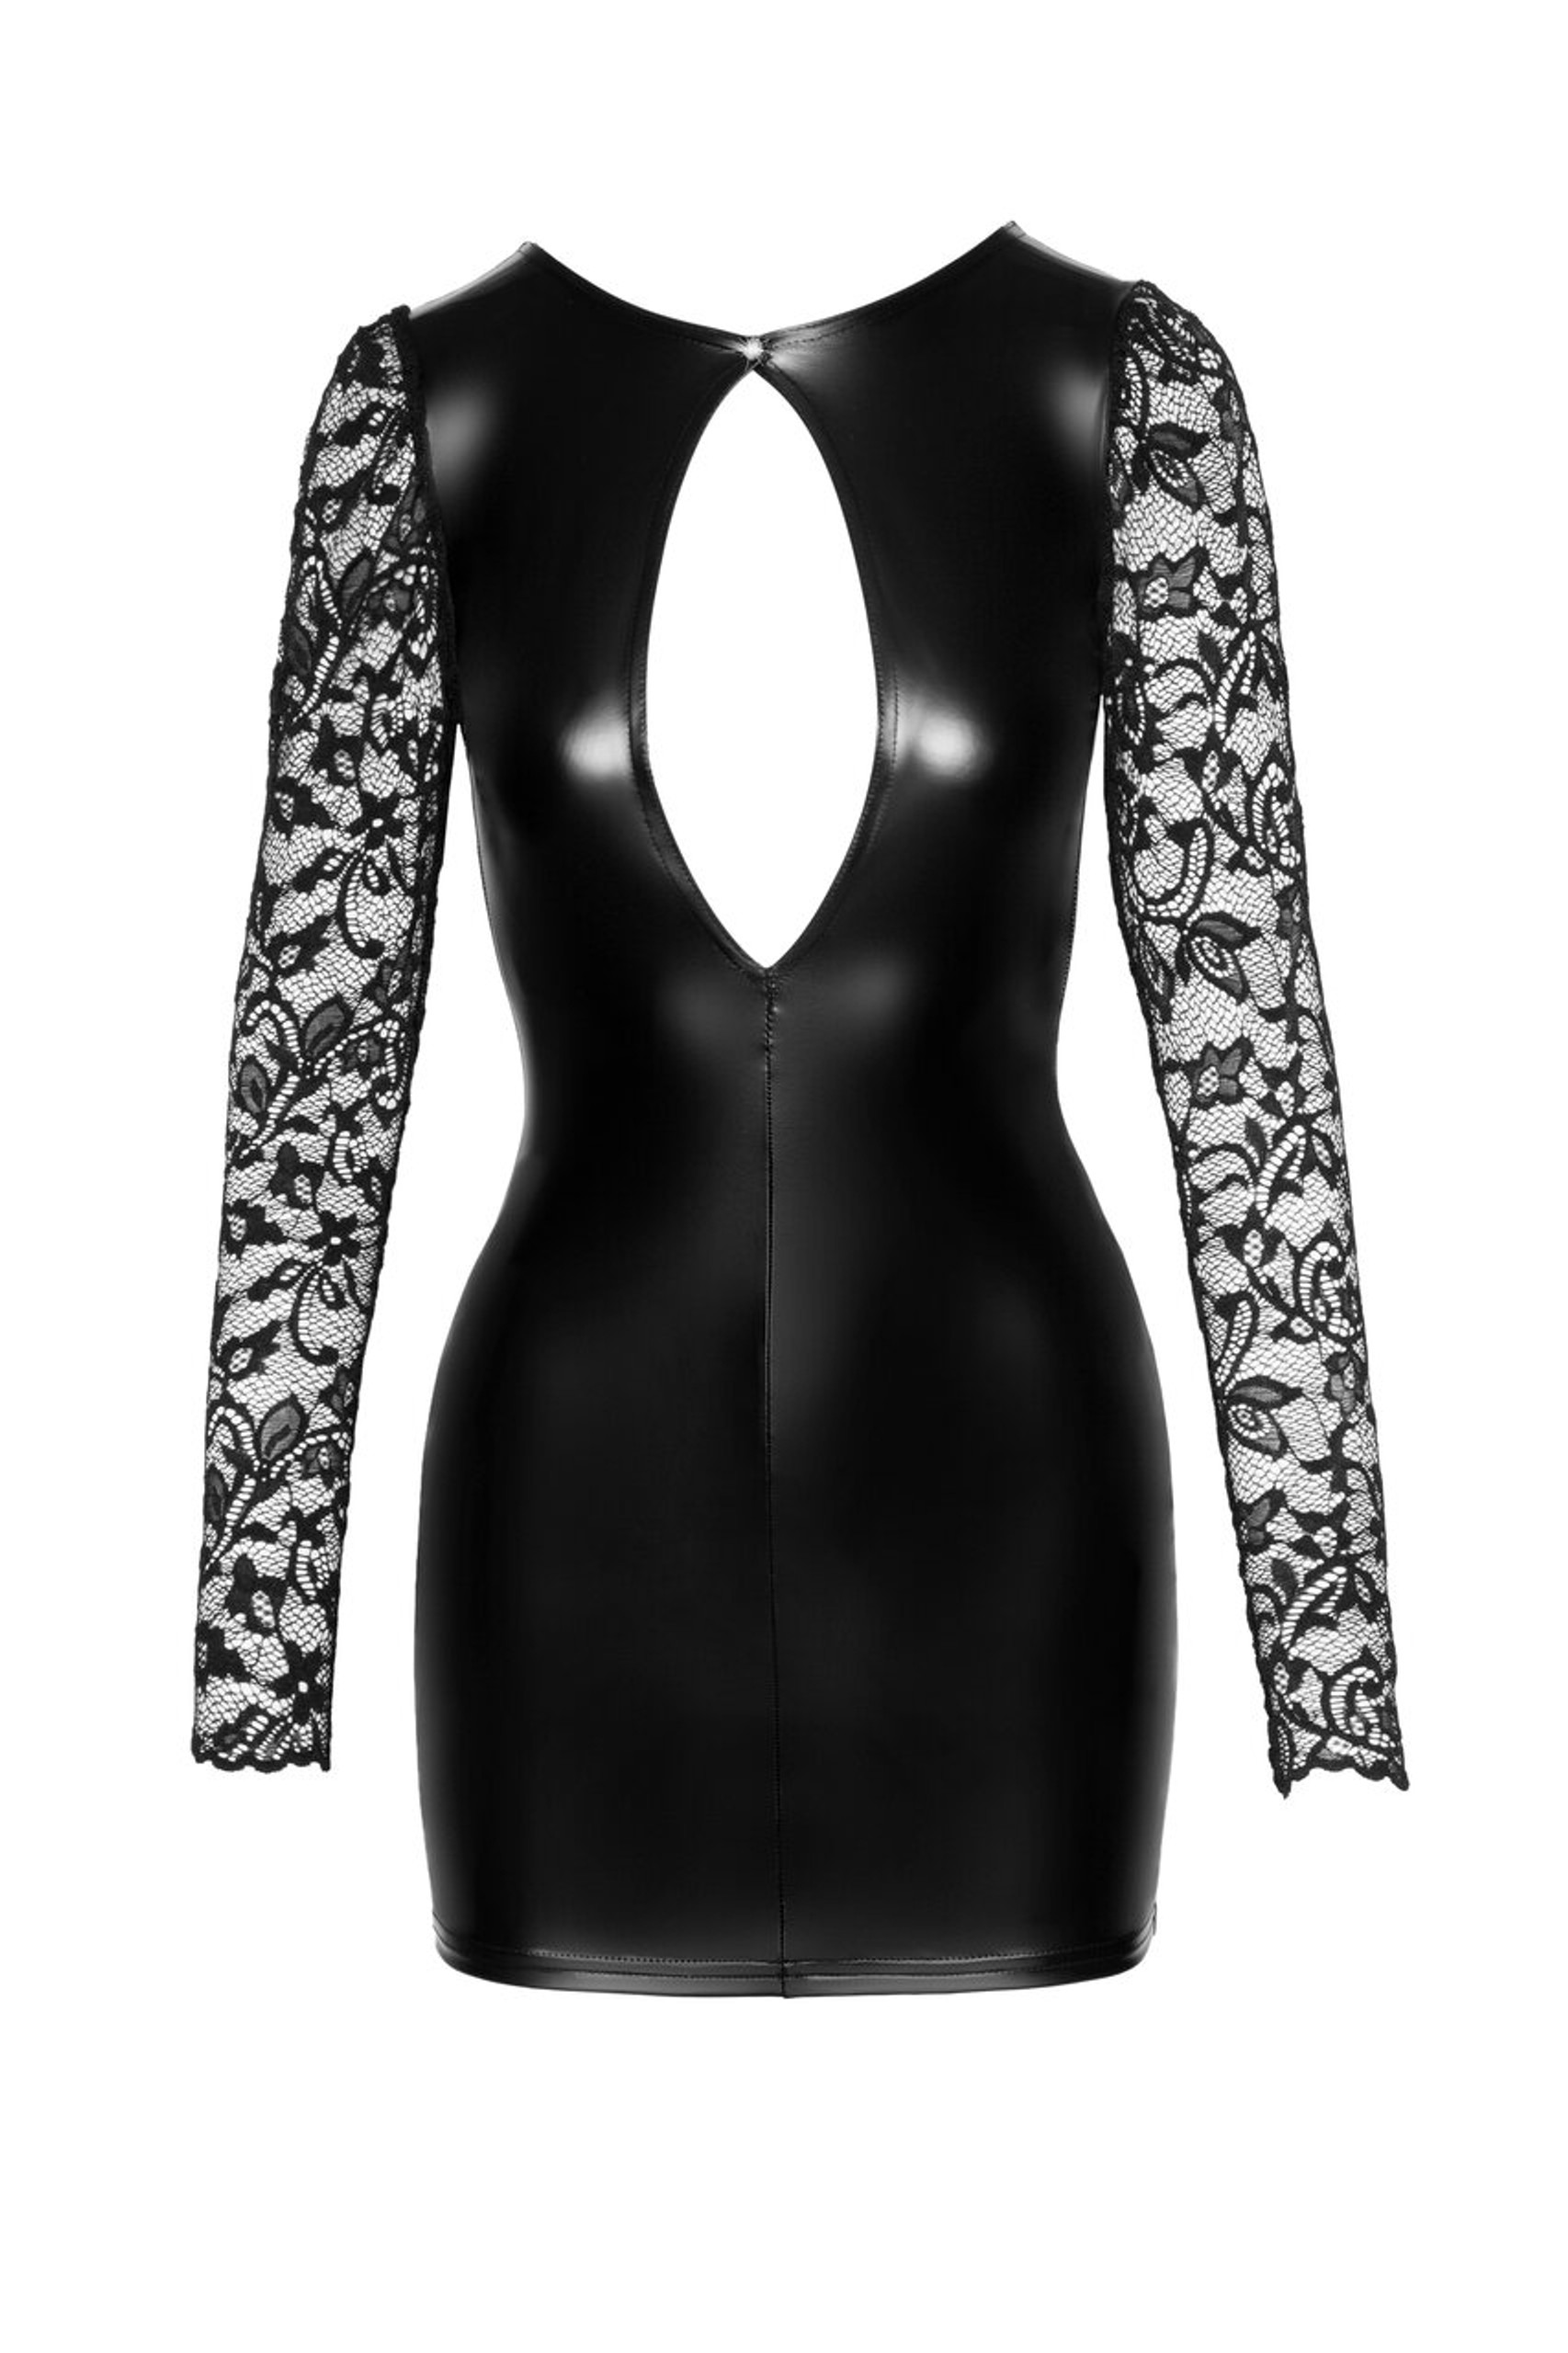 Noir Handmade F253 Short powerwetlook dress with lace sleeves